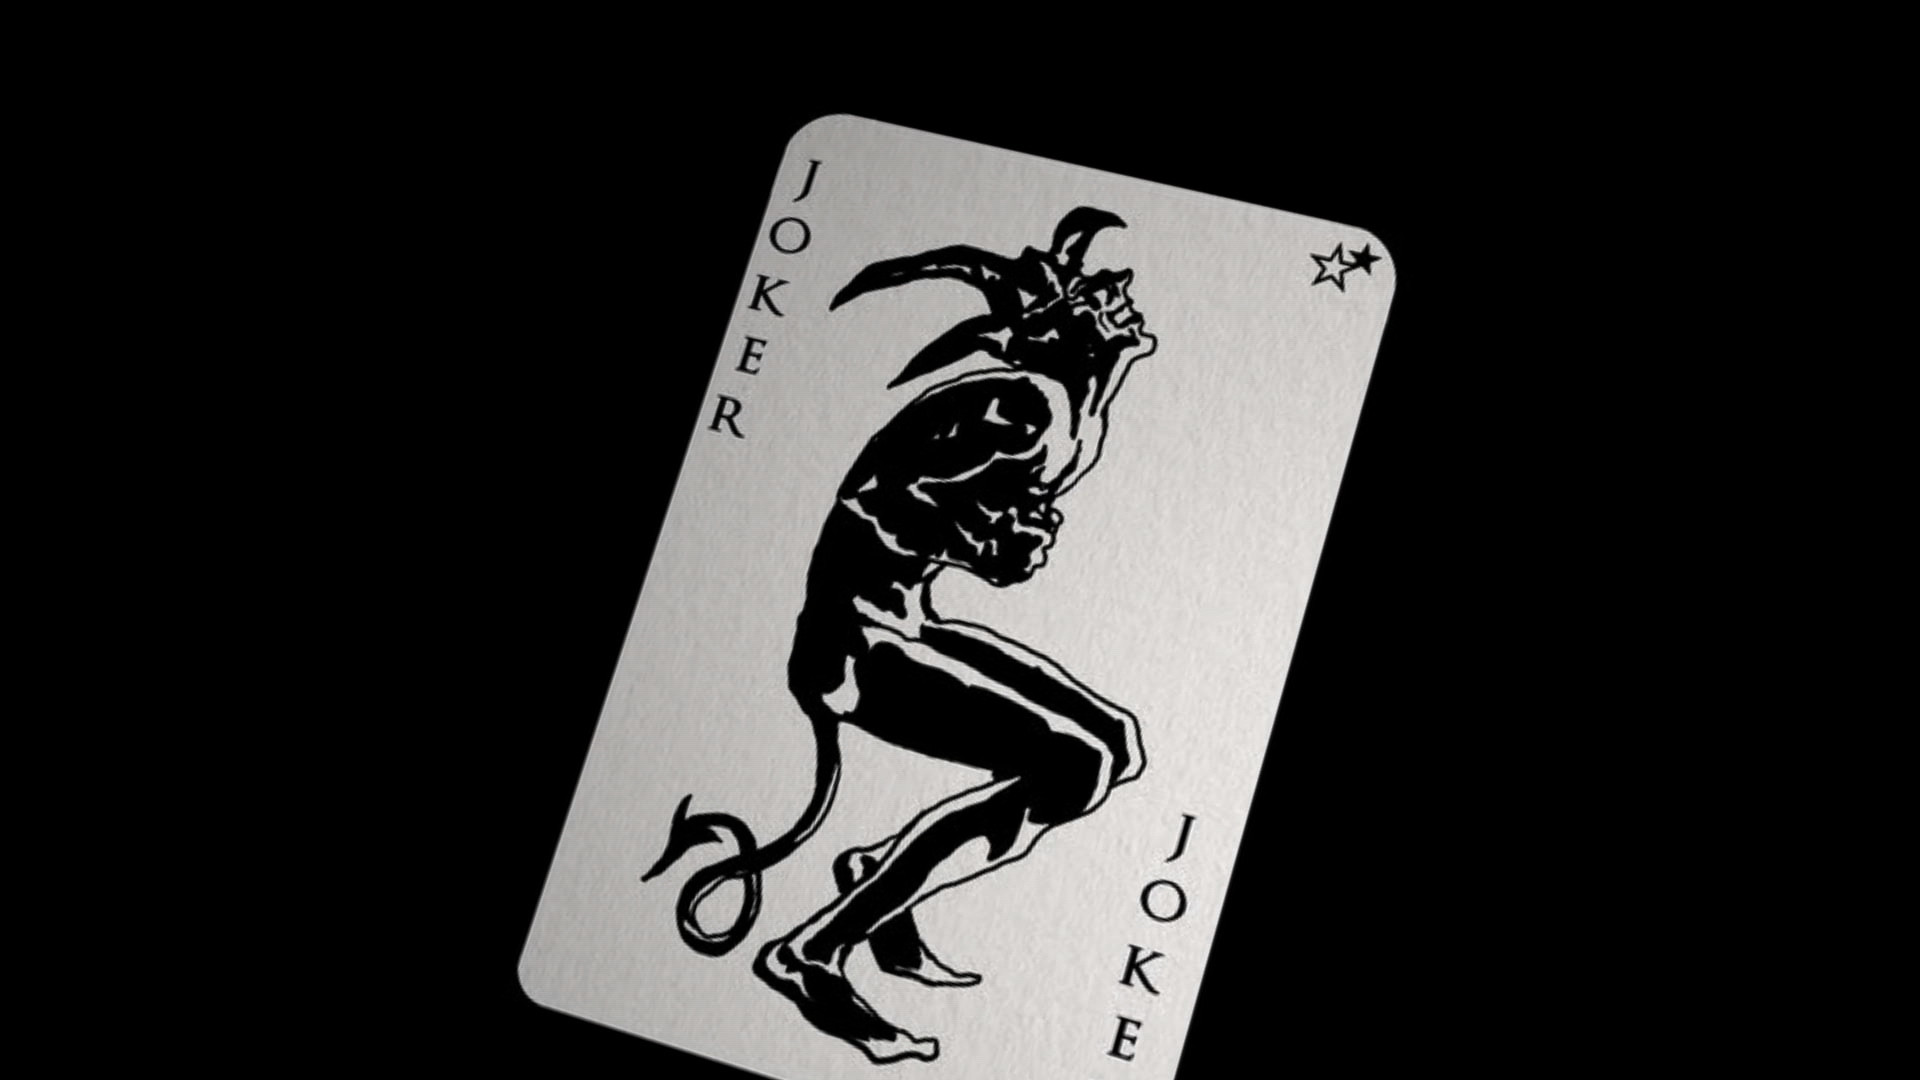 1920x1080 TheJoker Joker Card Hd Wallpapers